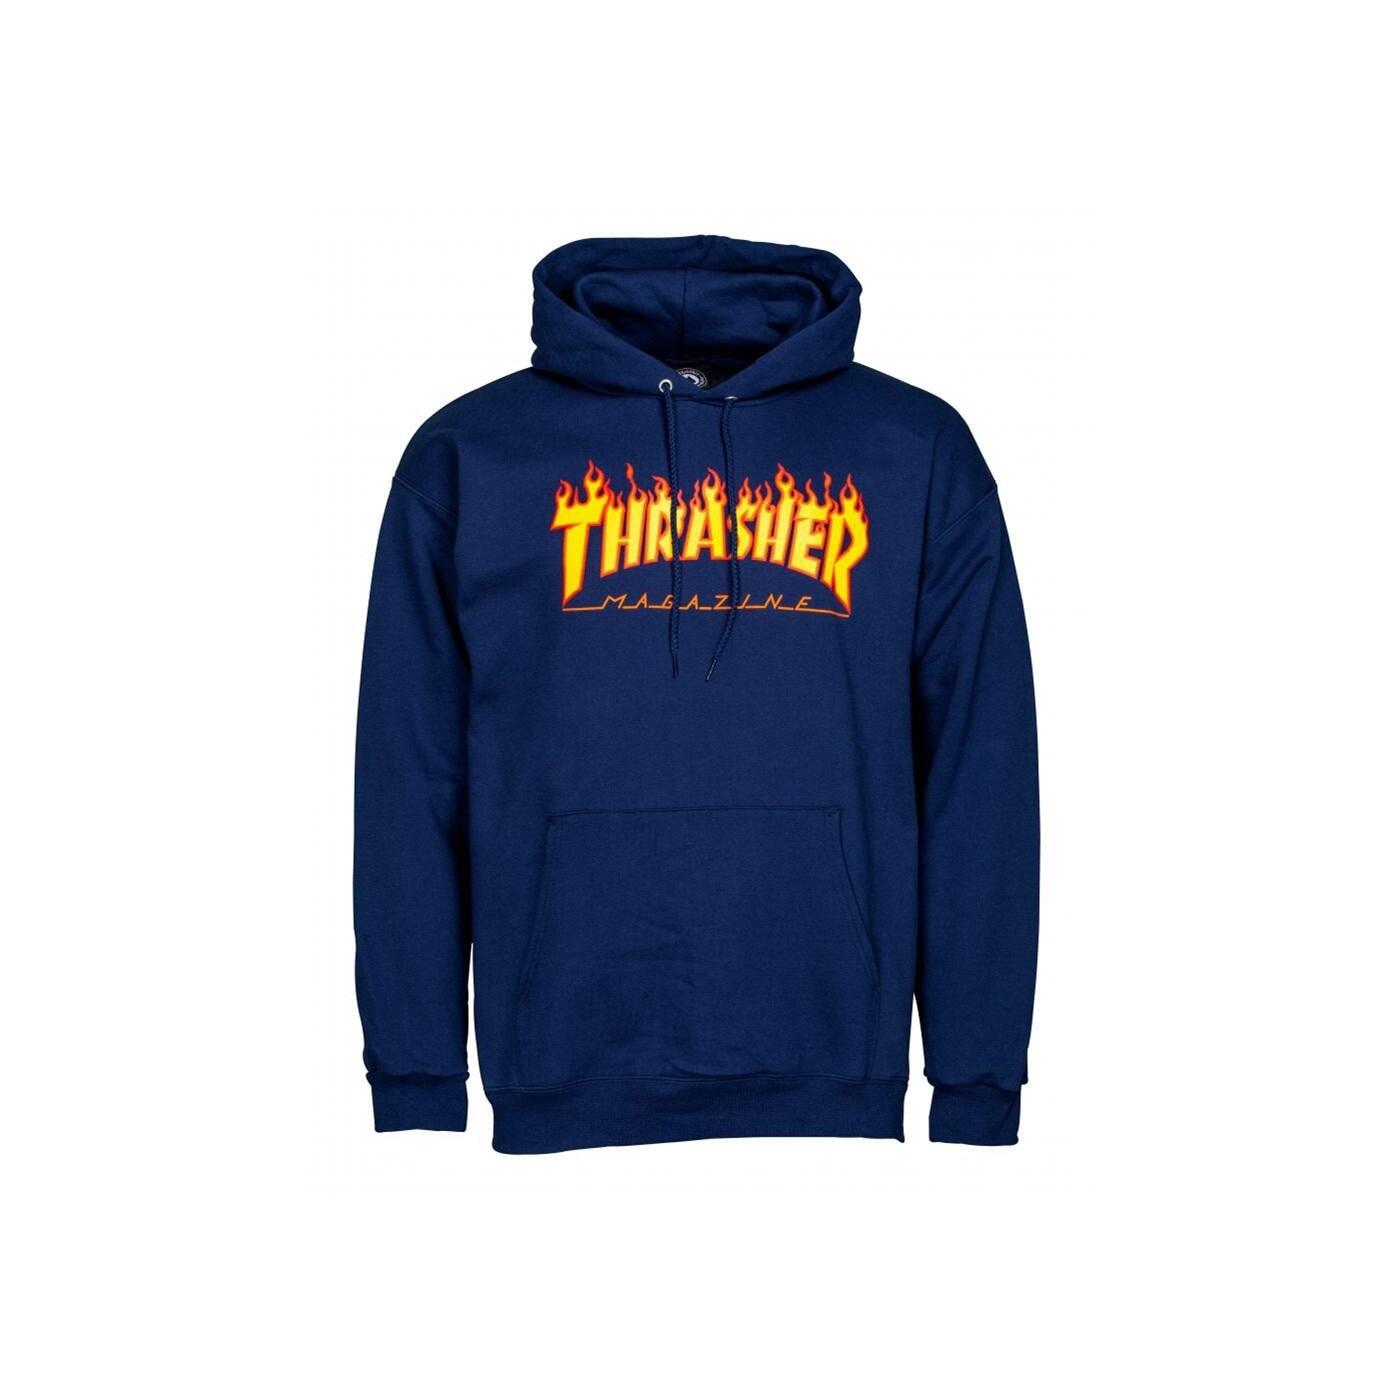 THRASHER Flame Logo Hoody